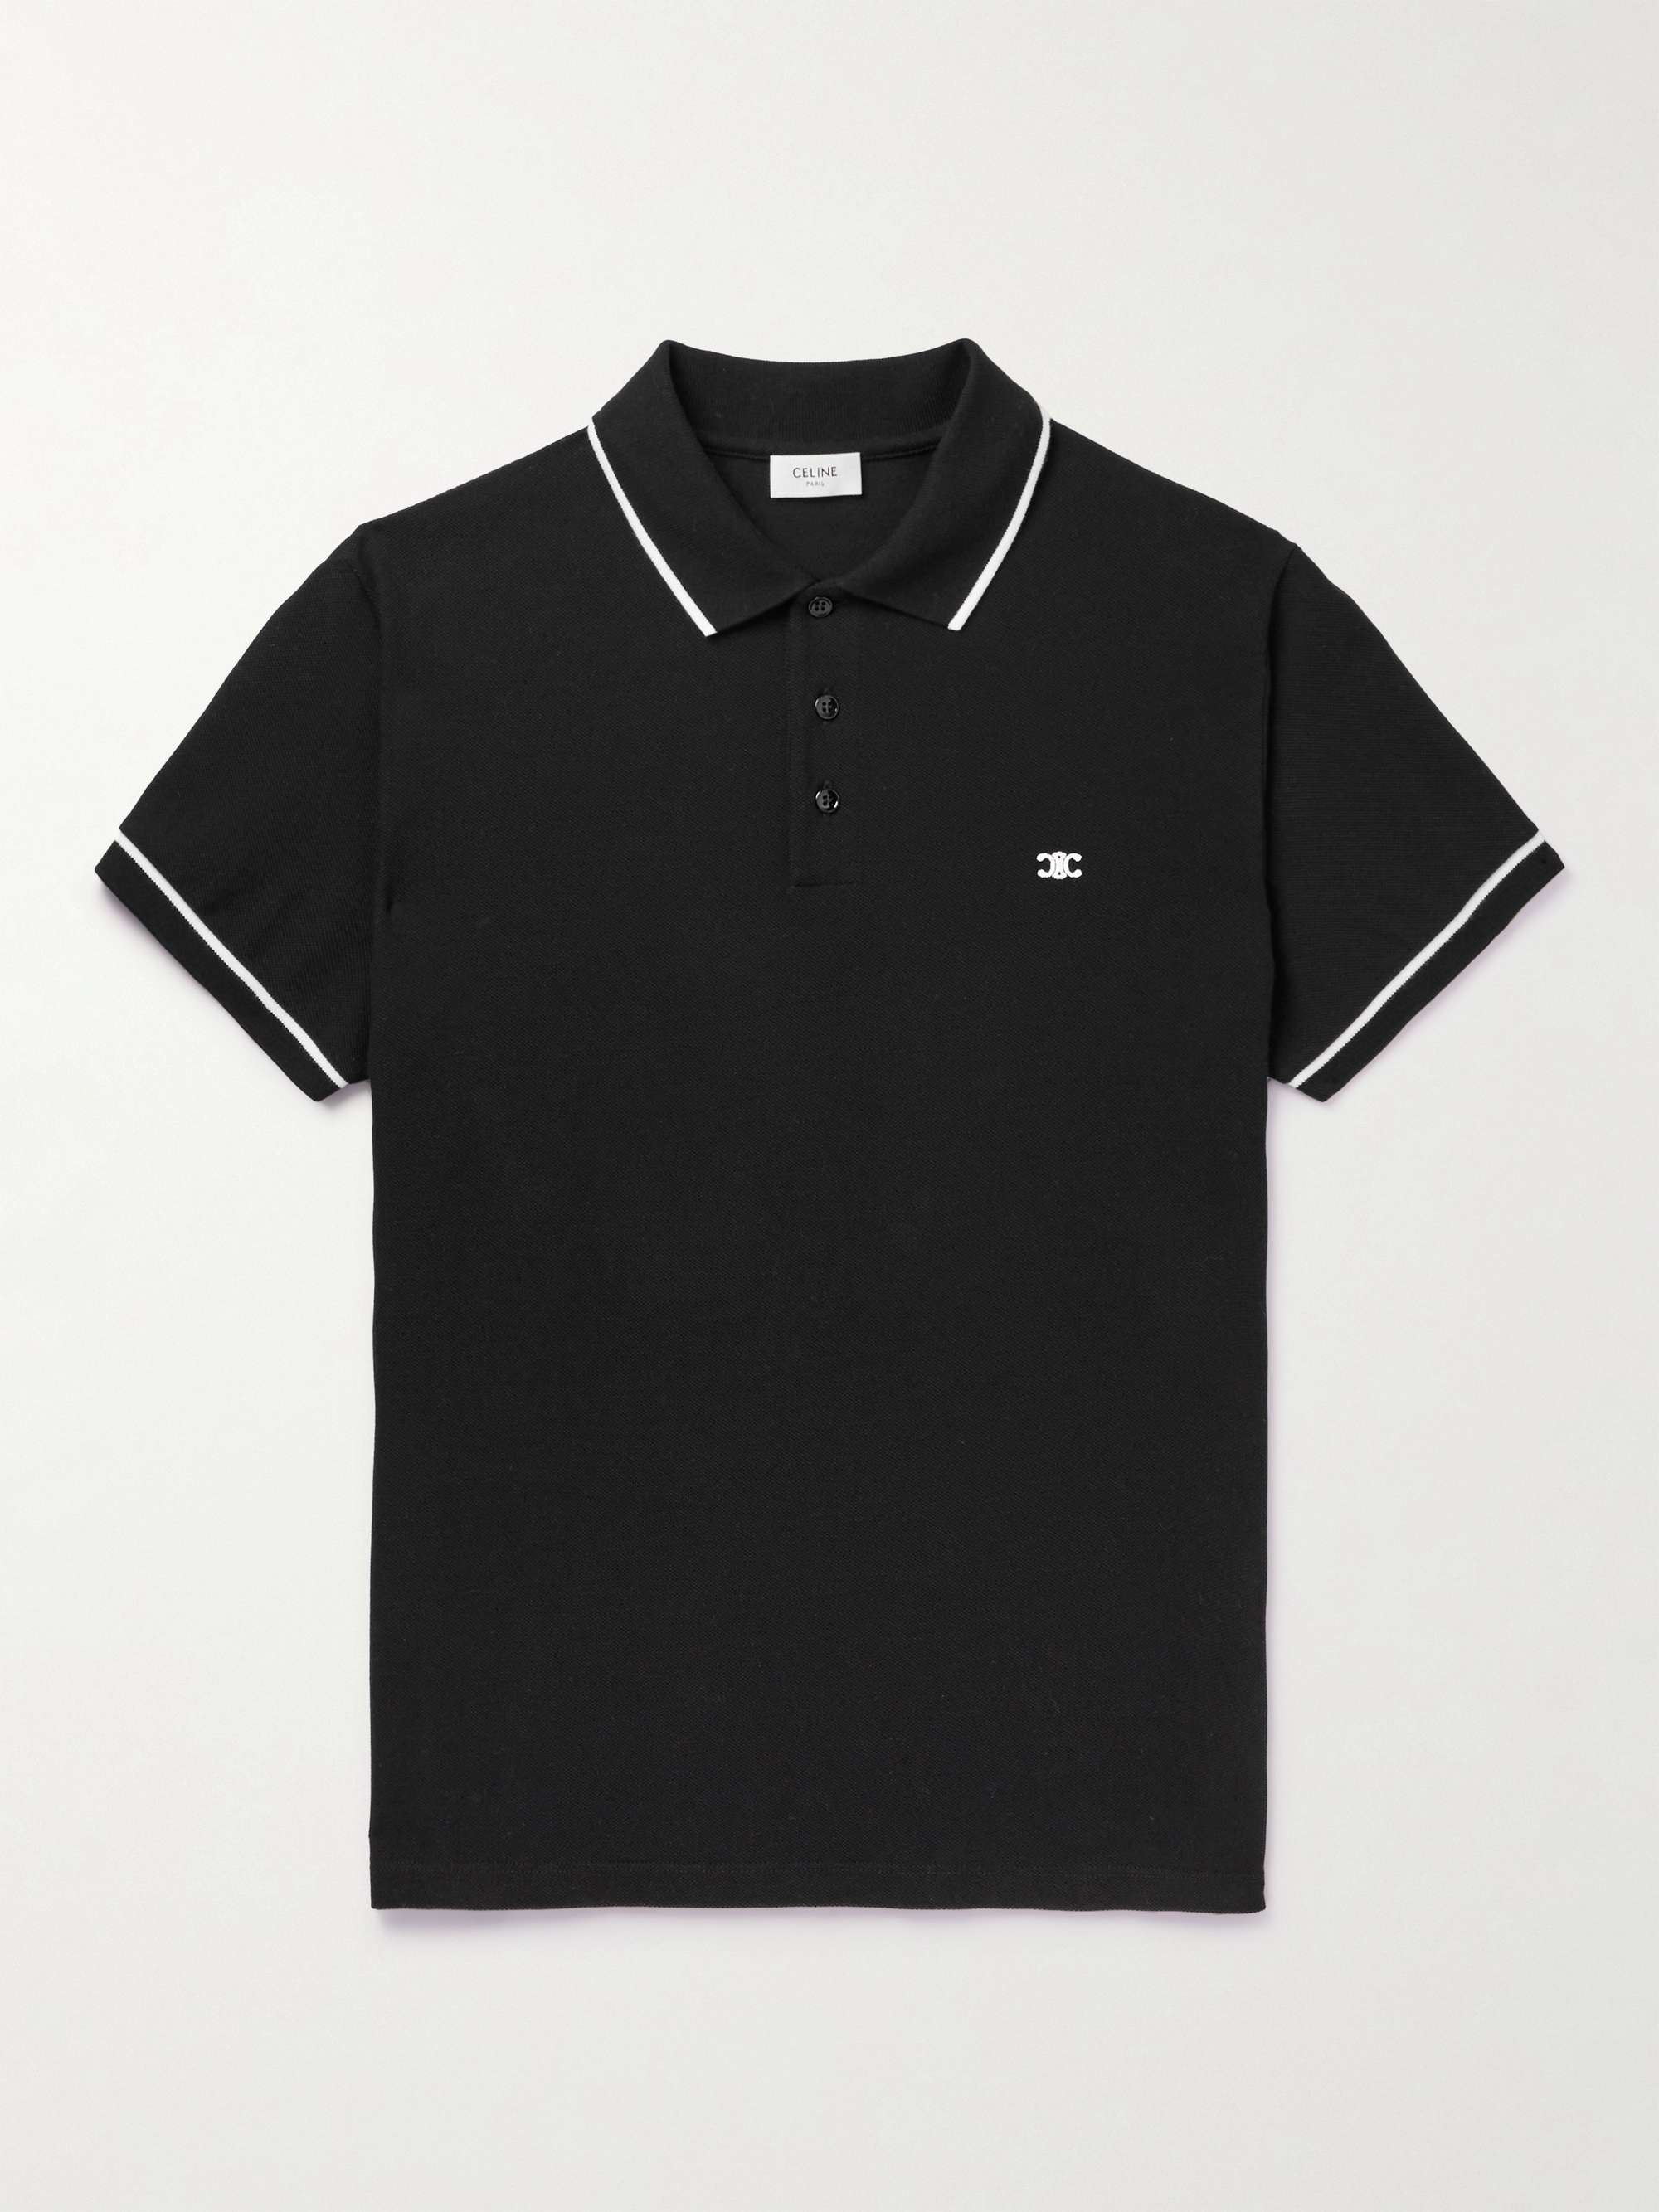 Celine Homme logo-embroidered Cotton-piqué Polo Shirt - Men - Black Polo Shirts - L